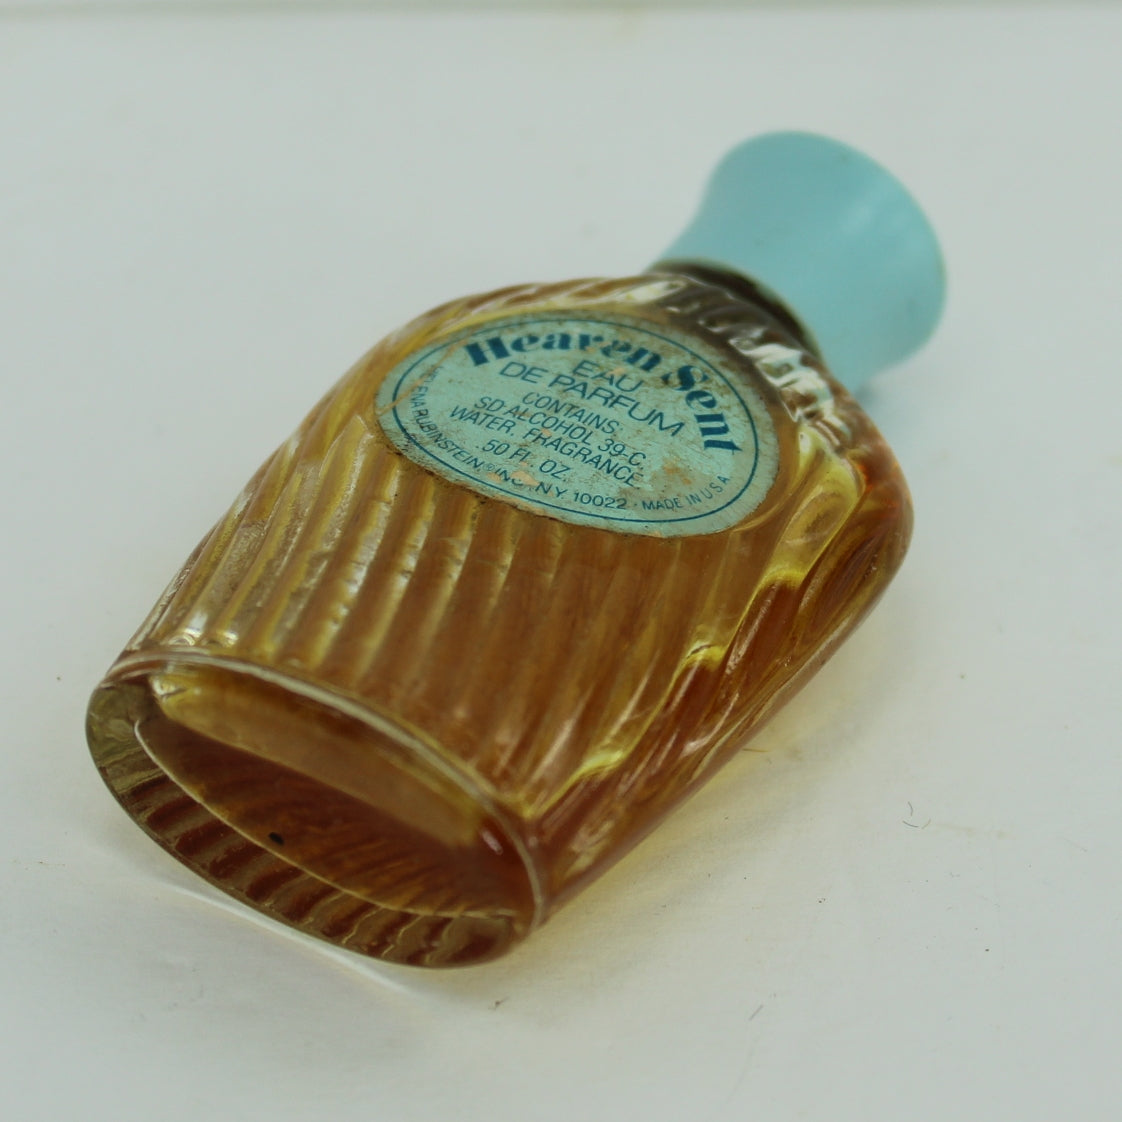 Heaven Sent Vintage Mini Eau de Parfum Helena Rubenstein 2 5/8" High label intact discolored